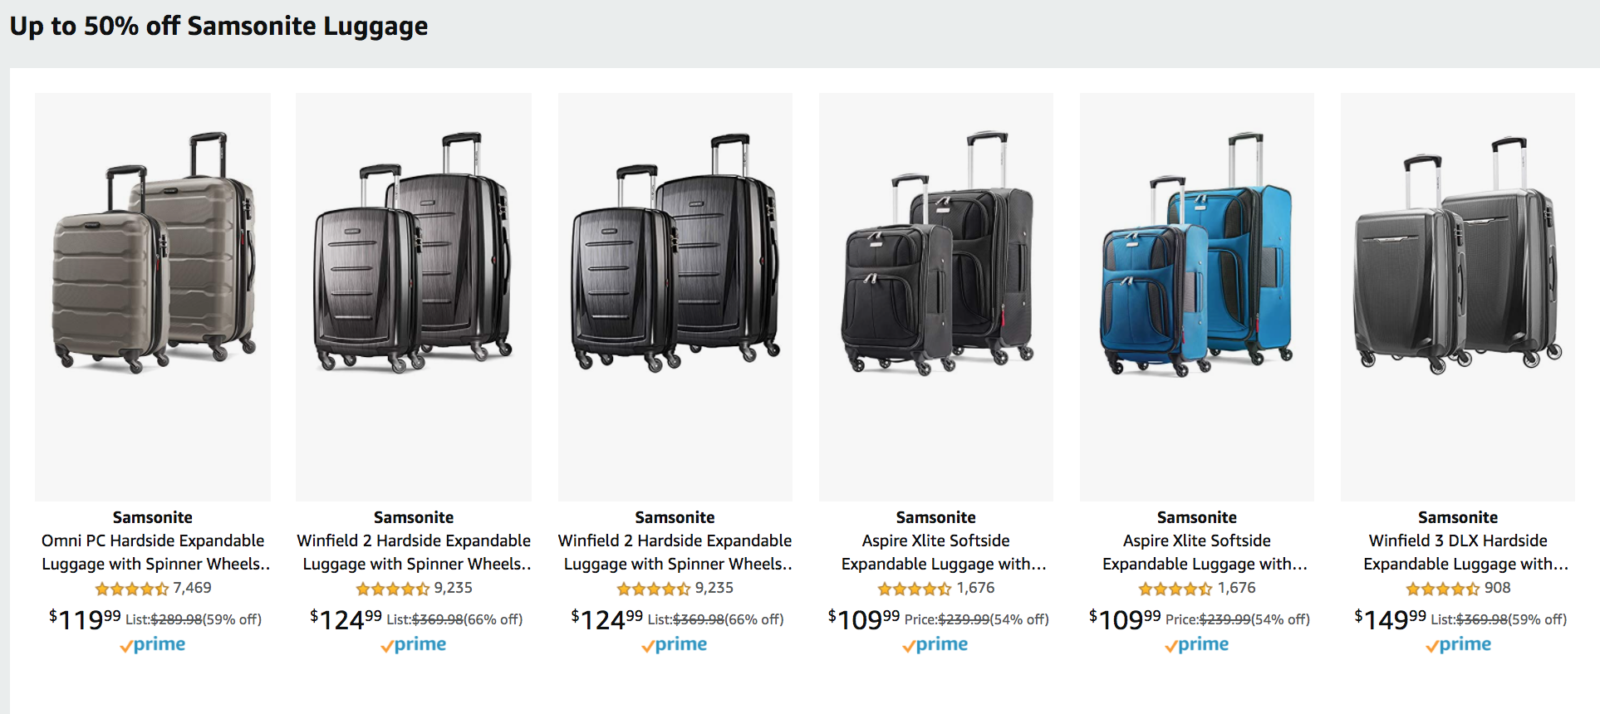 50% off Samsonite luggage at Amazon - Deals We Like